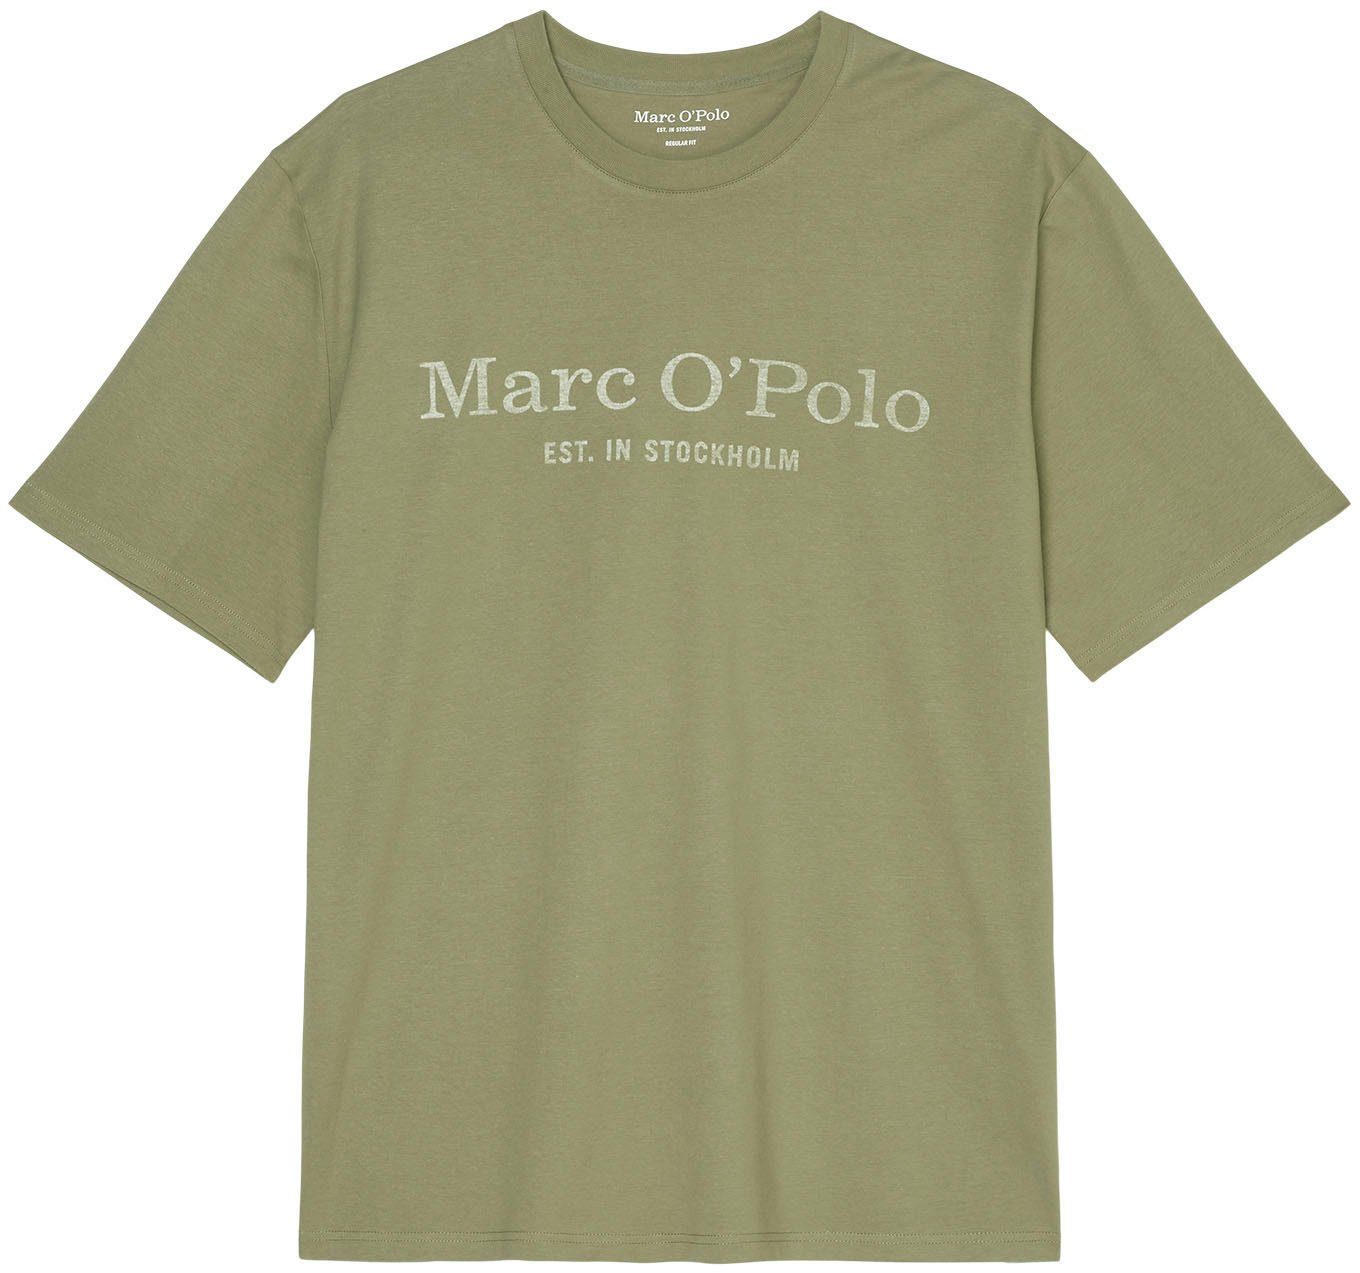 Marc O'Polo T-Shirt in olive Big&Tall-Größen